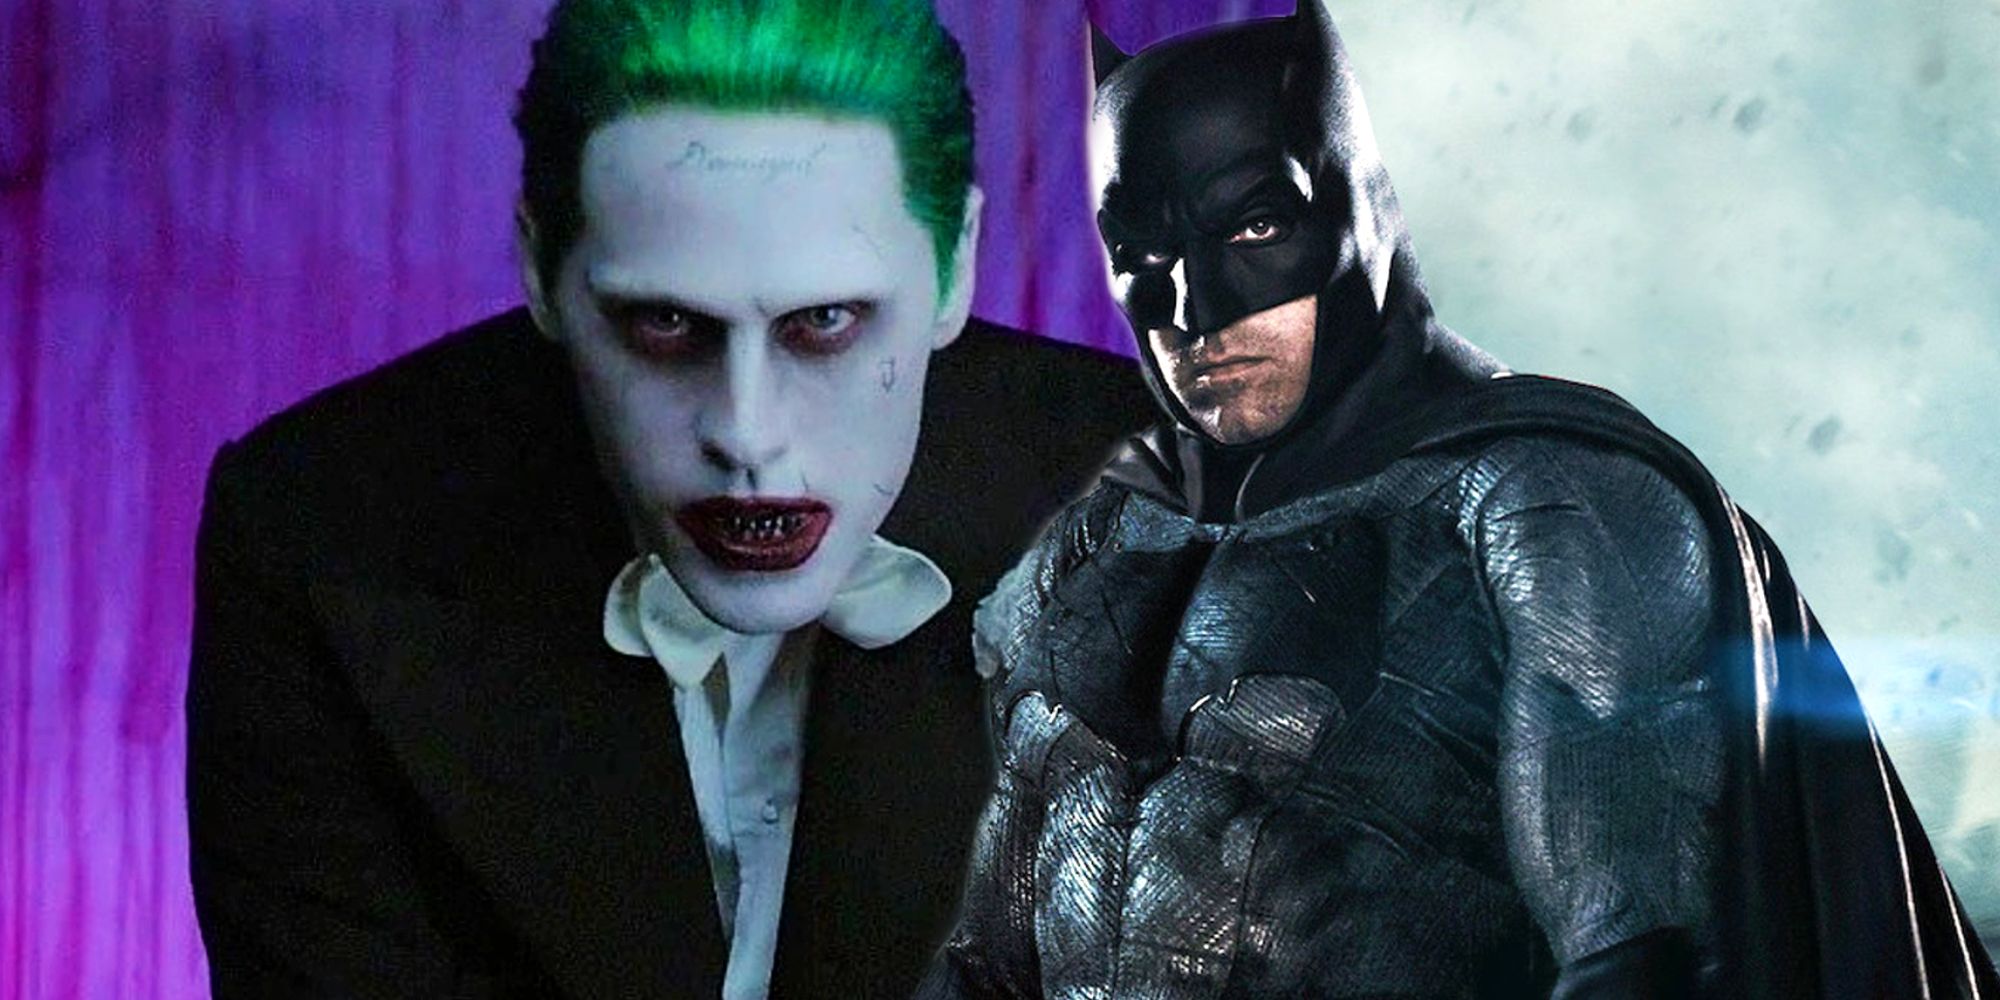 Ben Affleck's Batman and Jared Leto's Joker in The DCEU